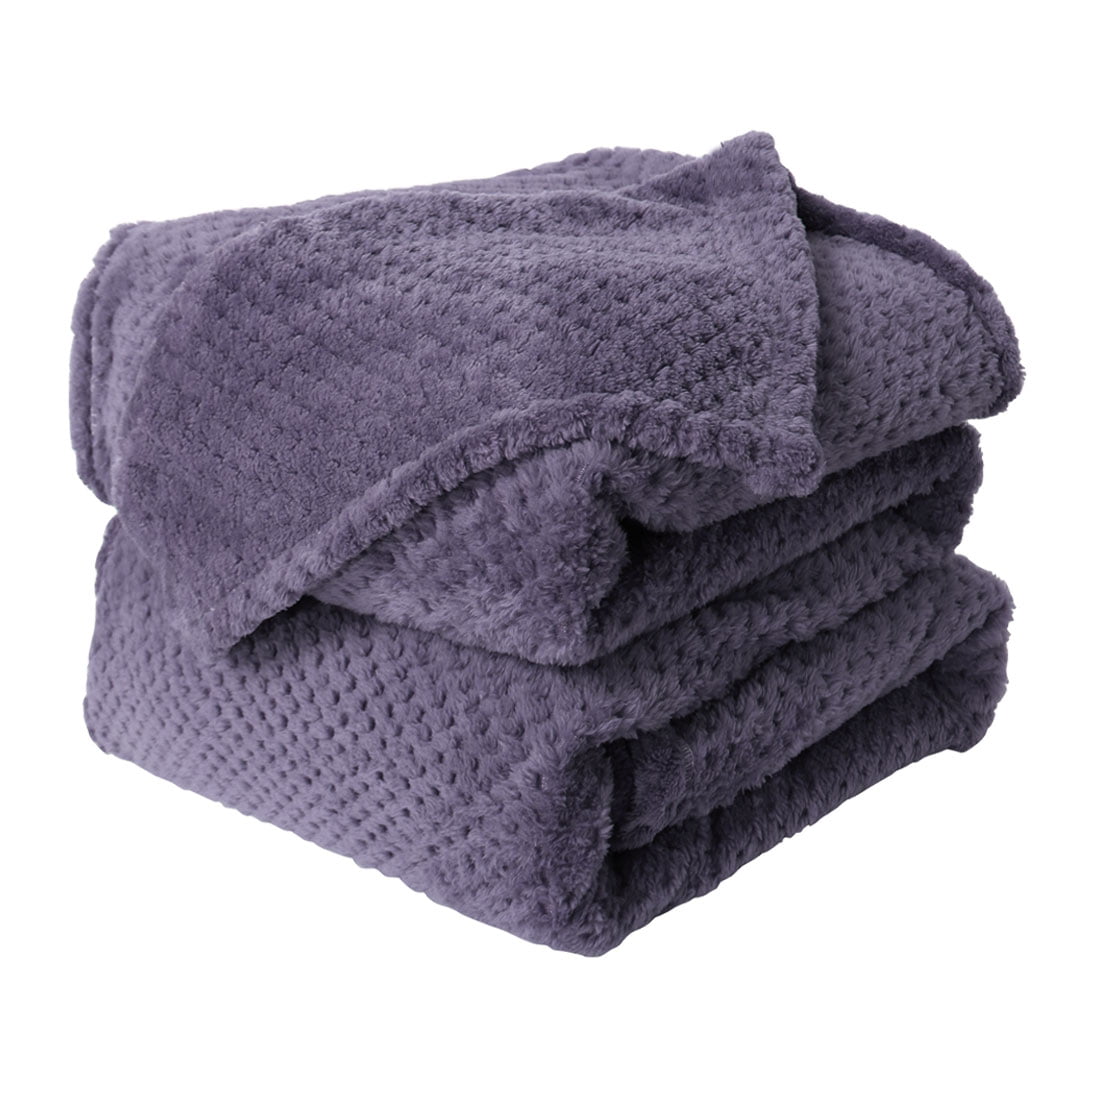 Soft Plush Fleece Bed Blanket Lightweight Flannel Blankets Queen Size 